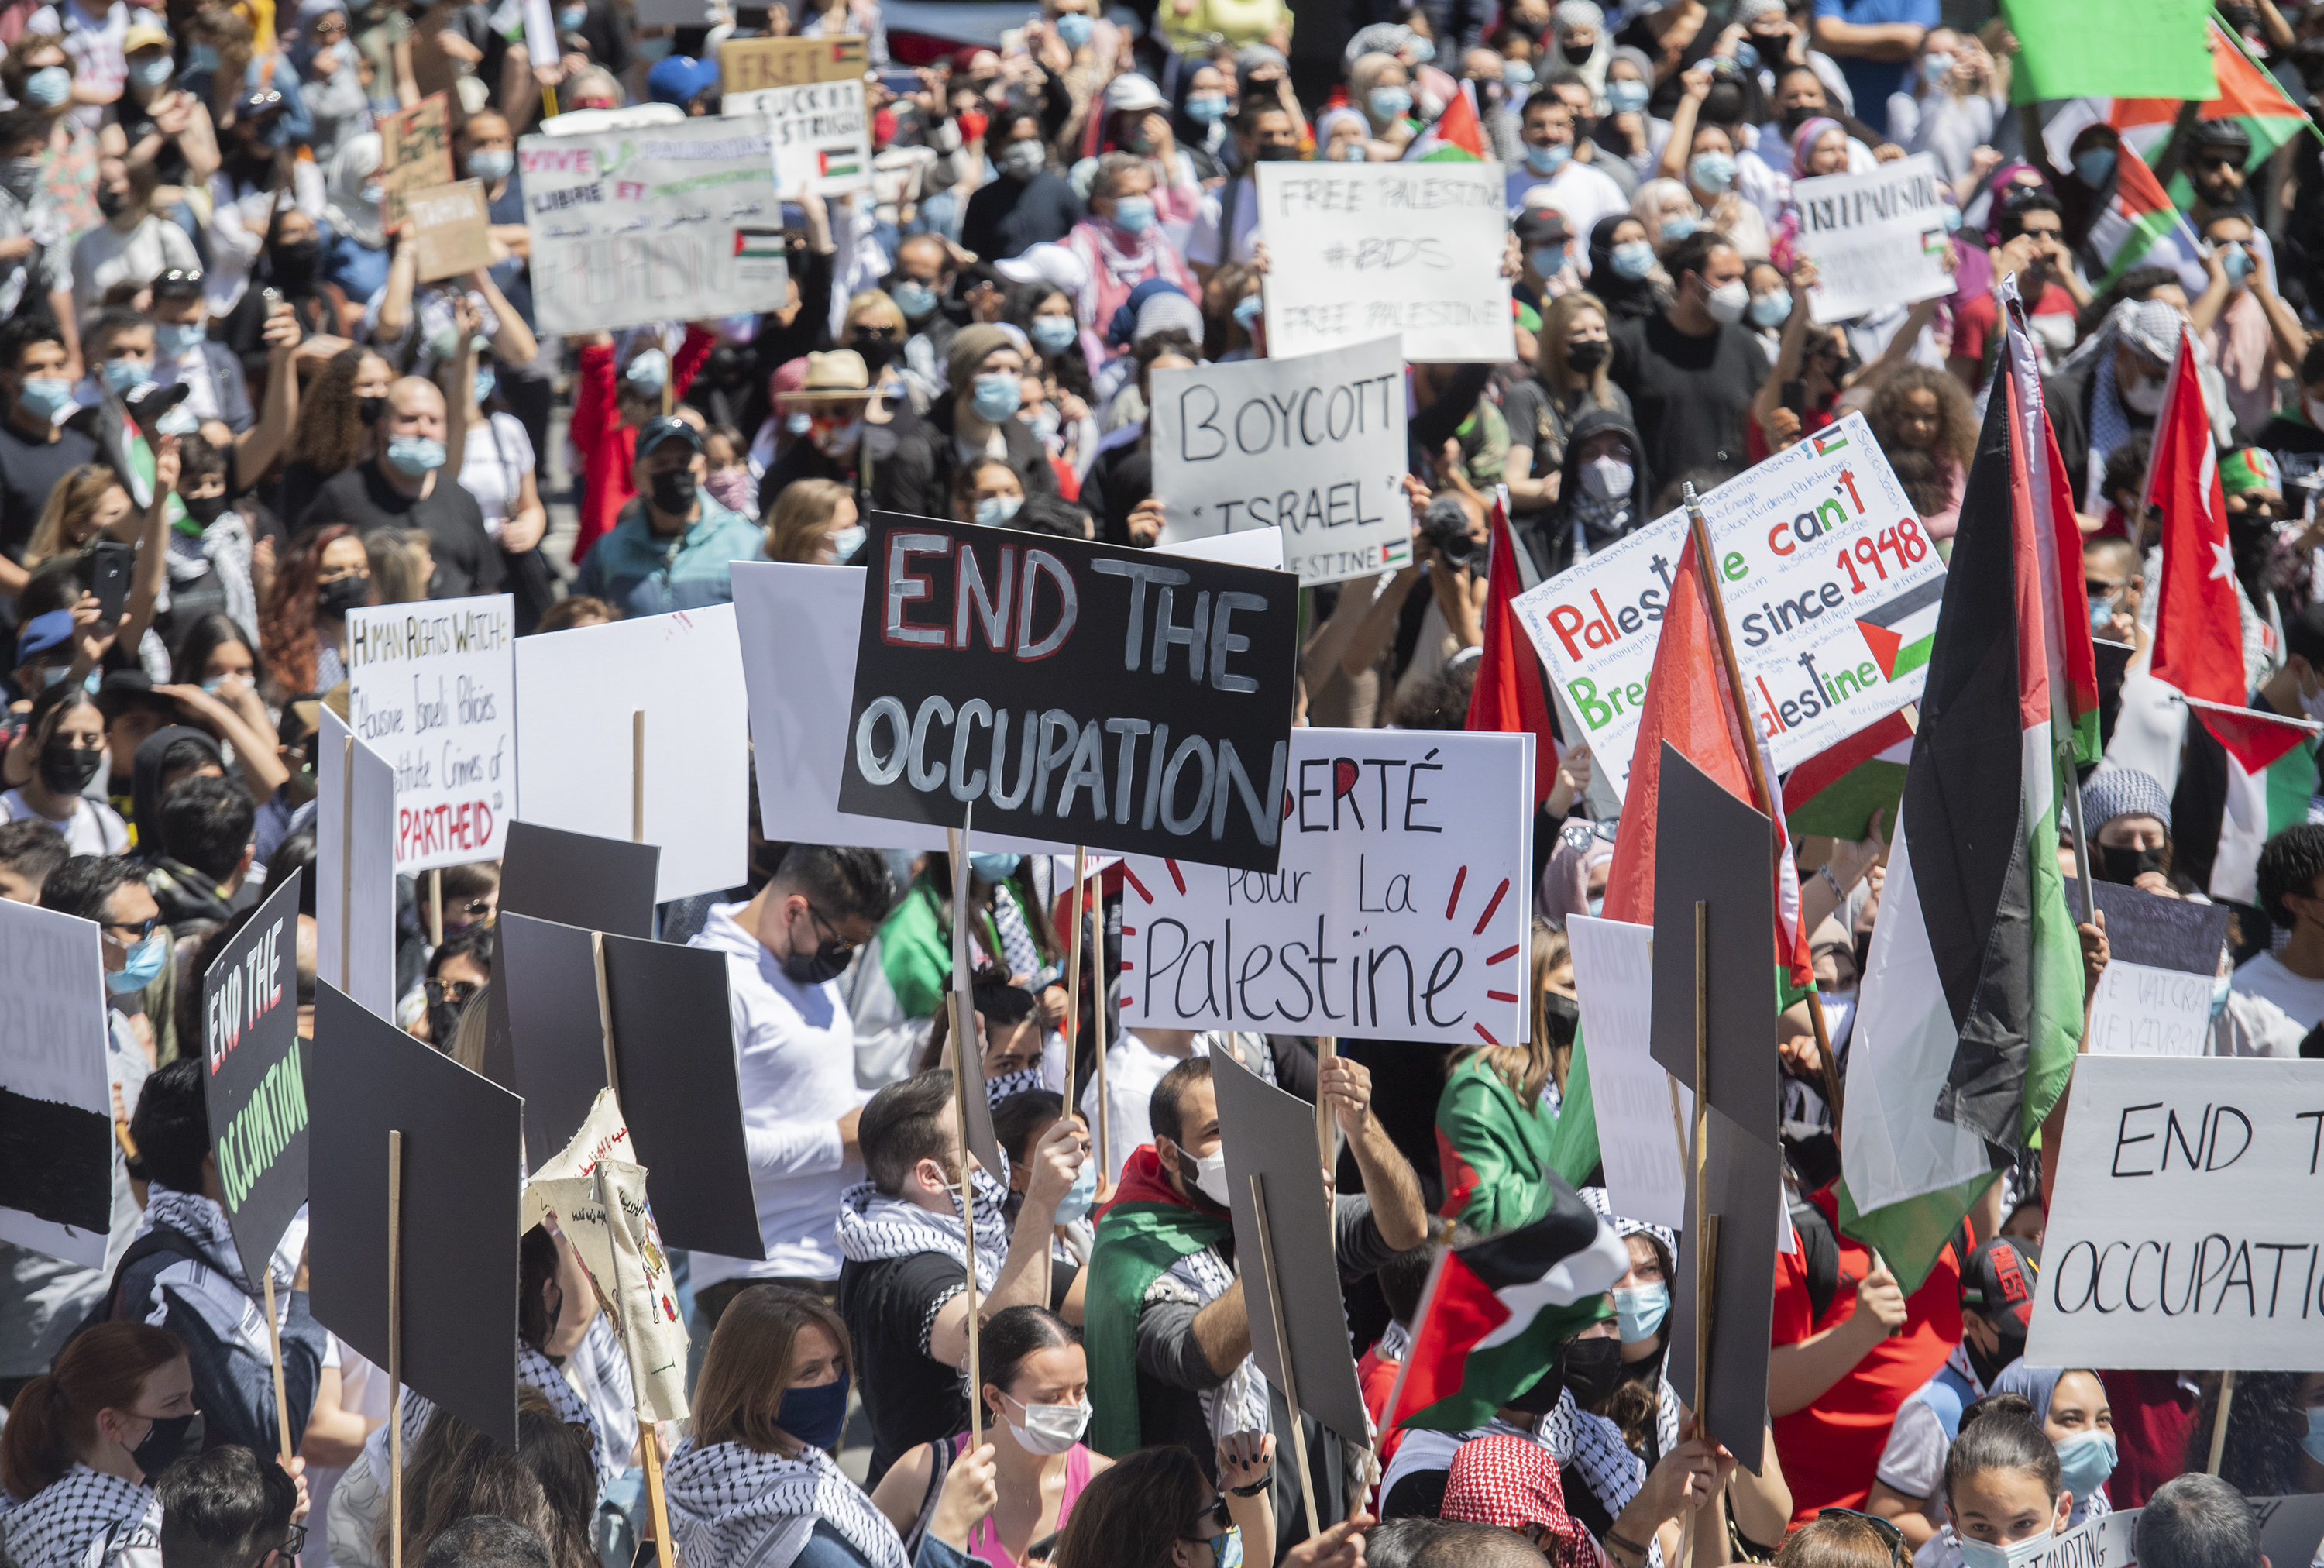 California governor adopts an approach that adopts the Palestinian narrative regarding Nakba